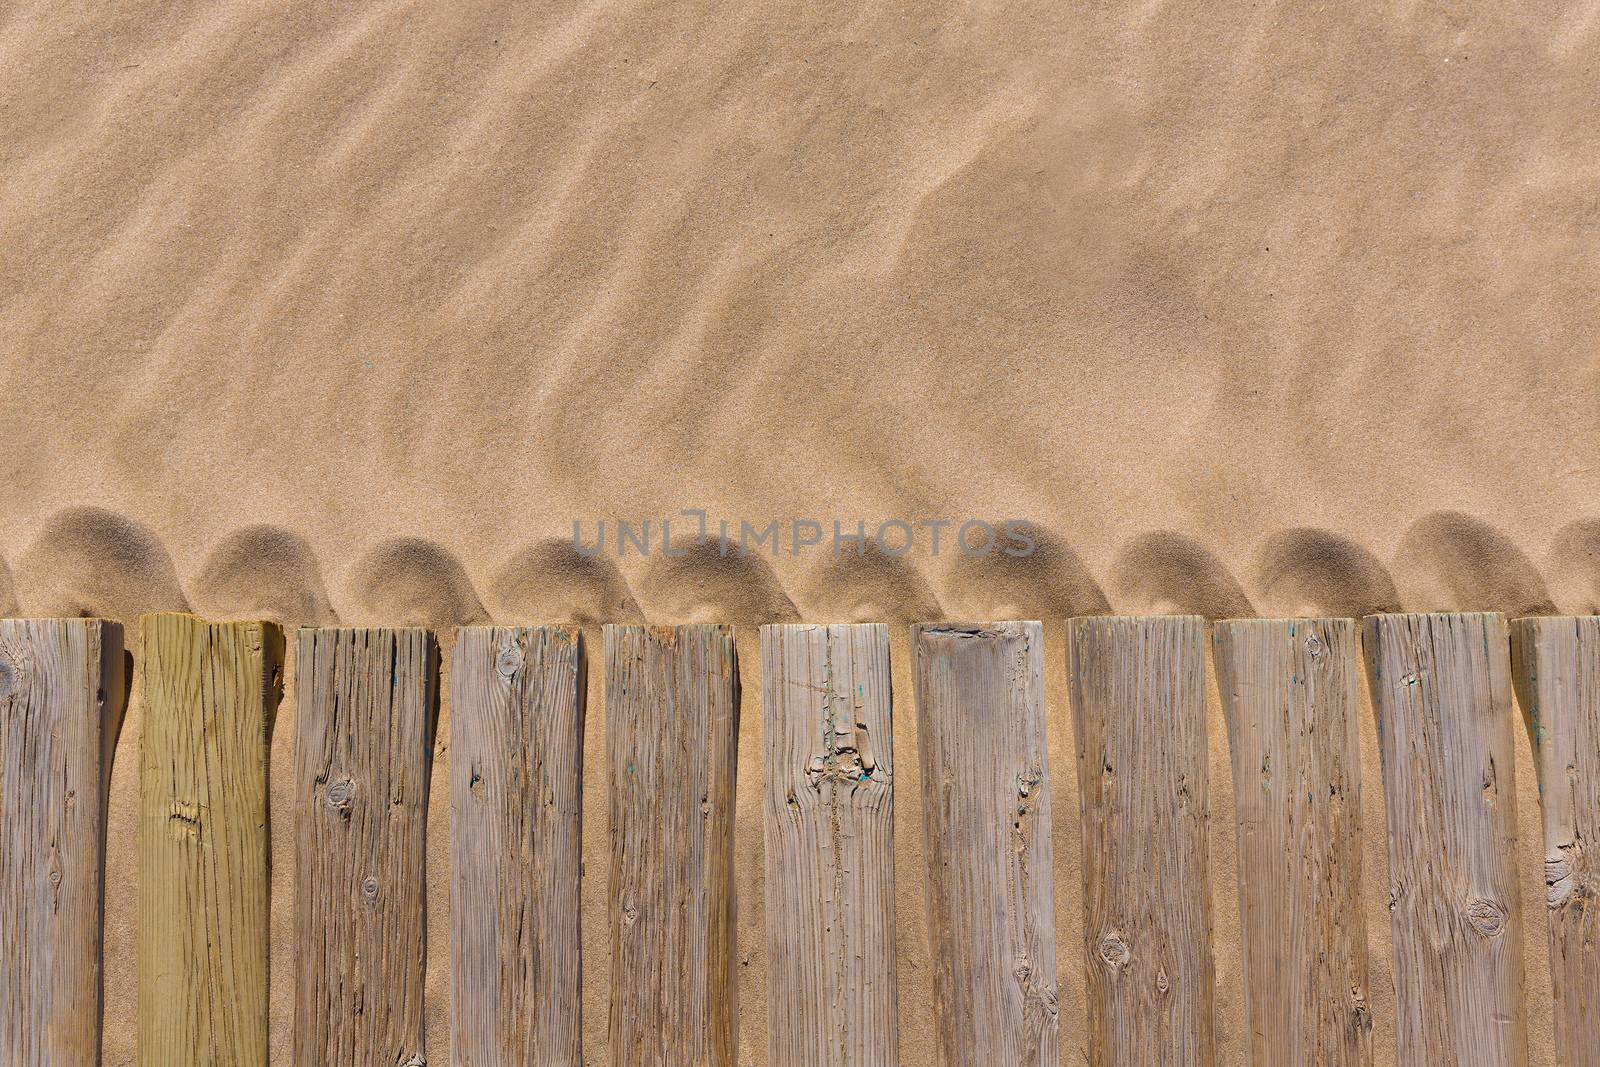 pine wood deck weathered in beach sand pattern texture detail